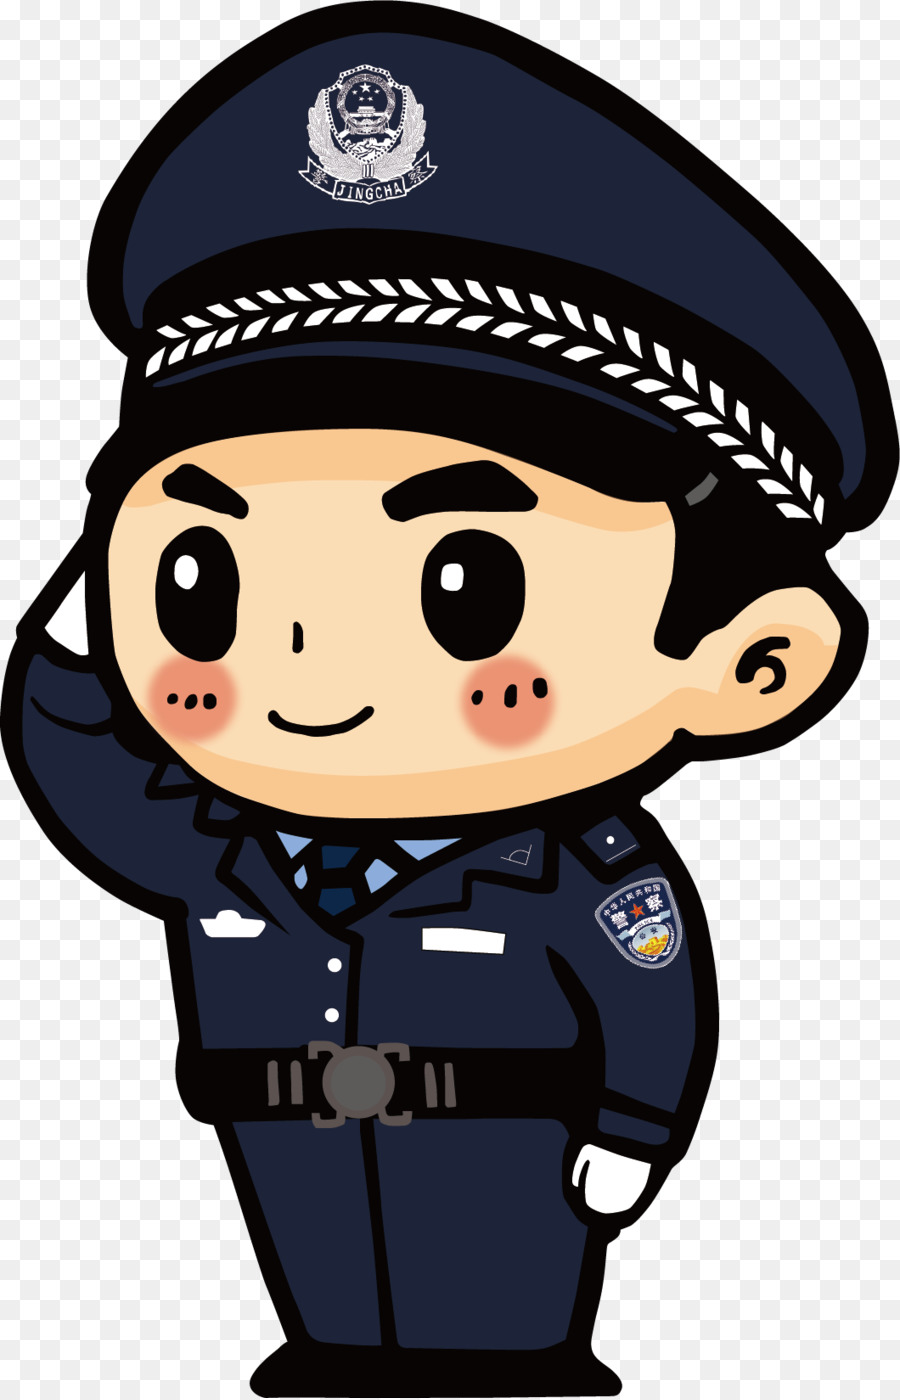 63 Gambar Kartun Polisi Gambar Pixabay